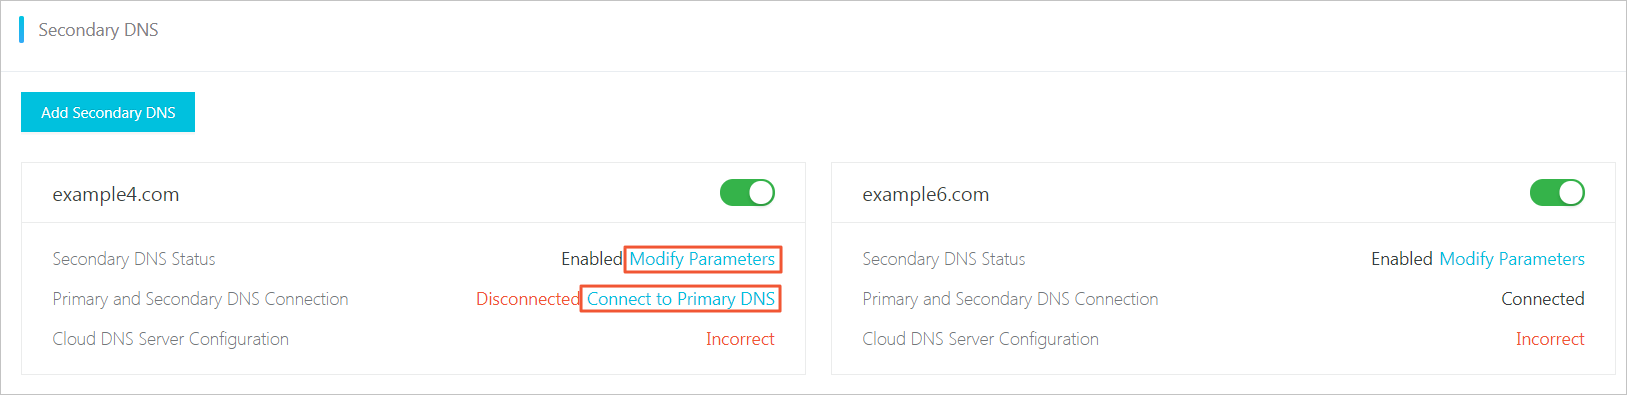 modify-parameters